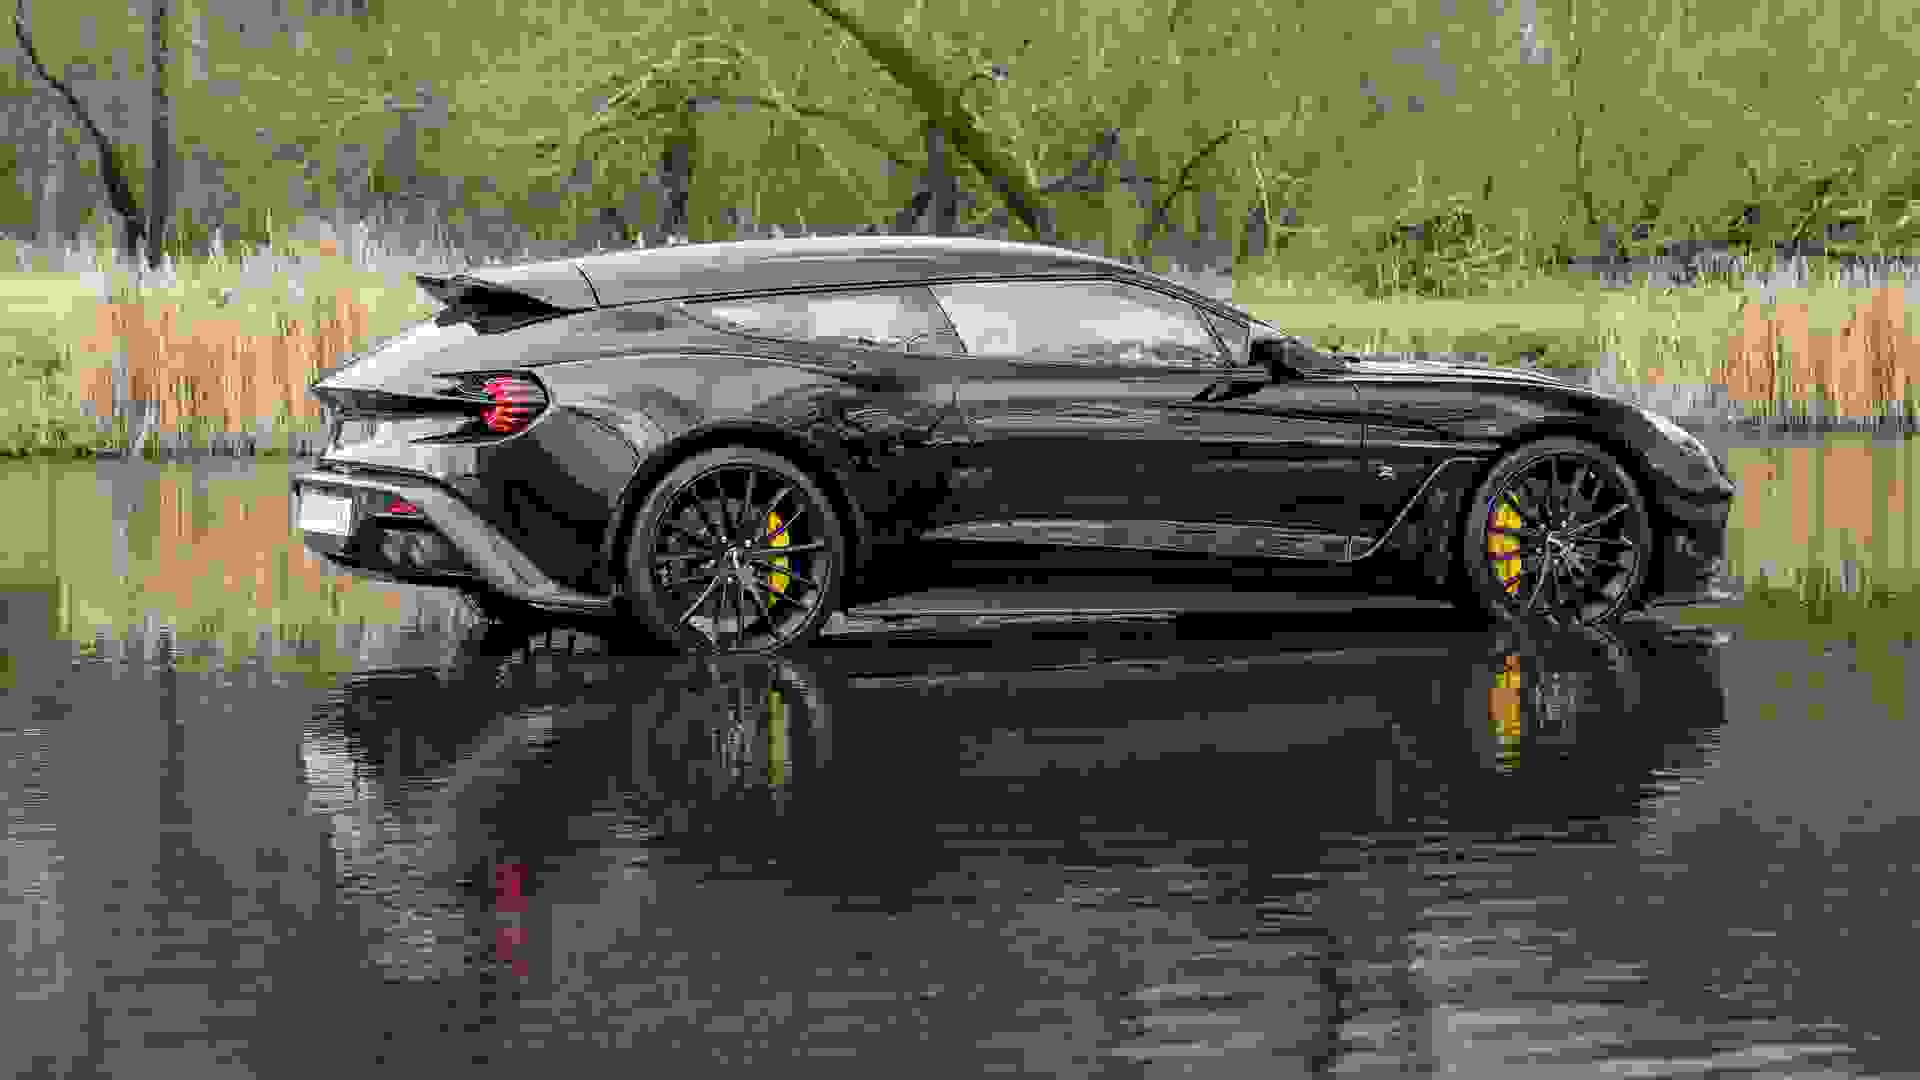 Aston Martin Vanquish Photo b0bc0ffa-16bc-4b13-81e3-c6e080f2920d.jpg